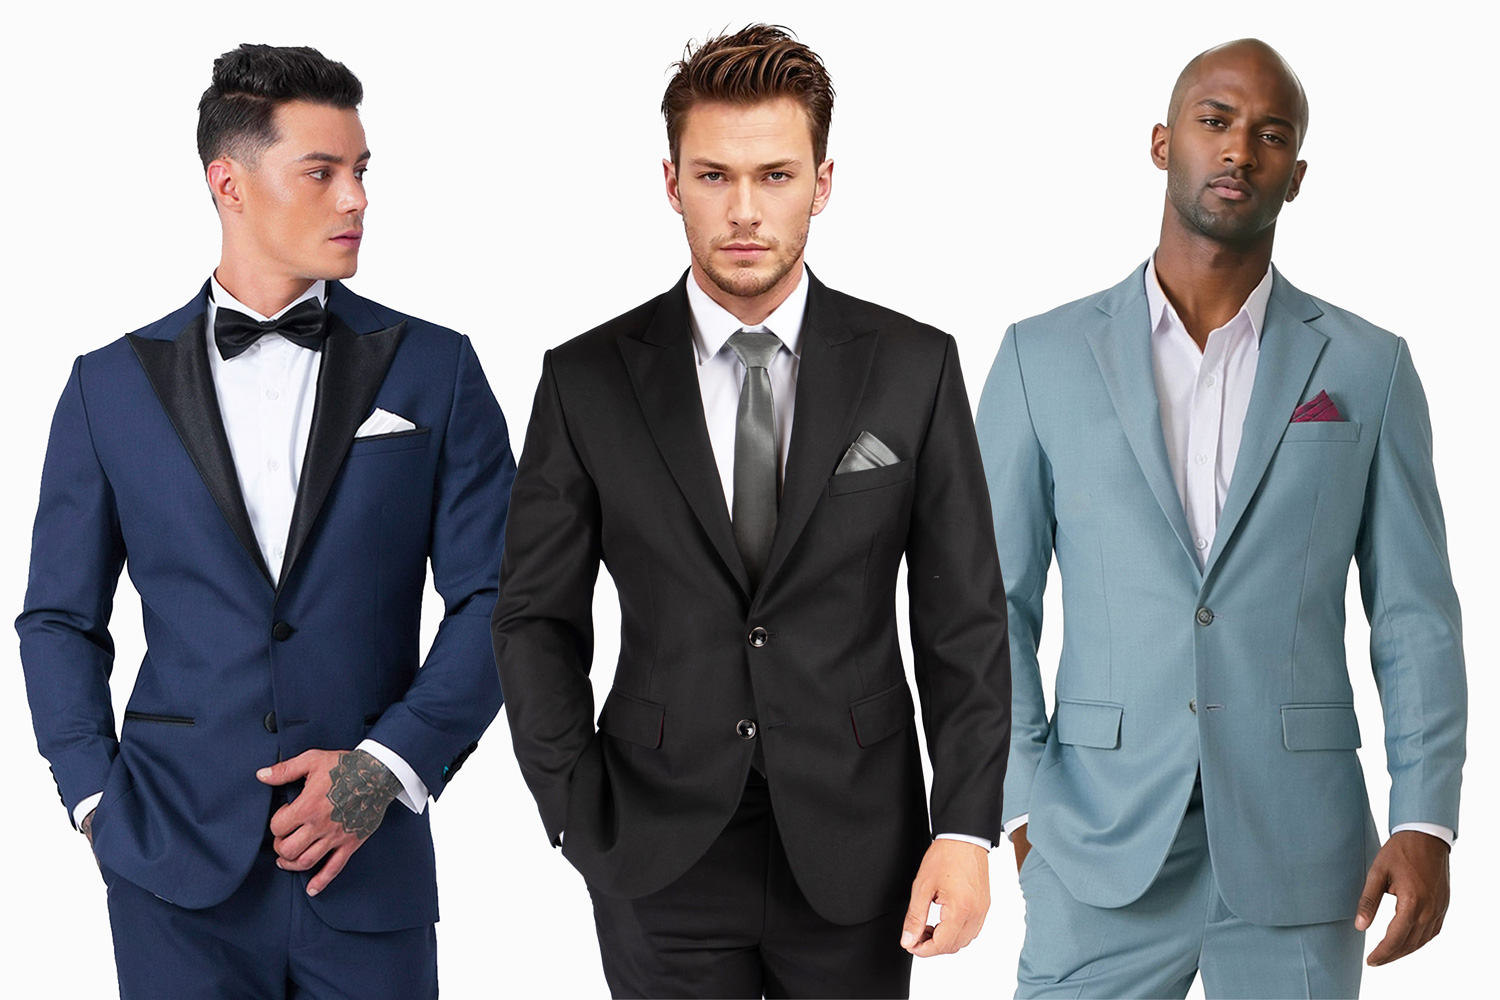 SARTORO | Custom Suits & Tuxedos - Suits & Tuxedos for an LGBT Wedding ...